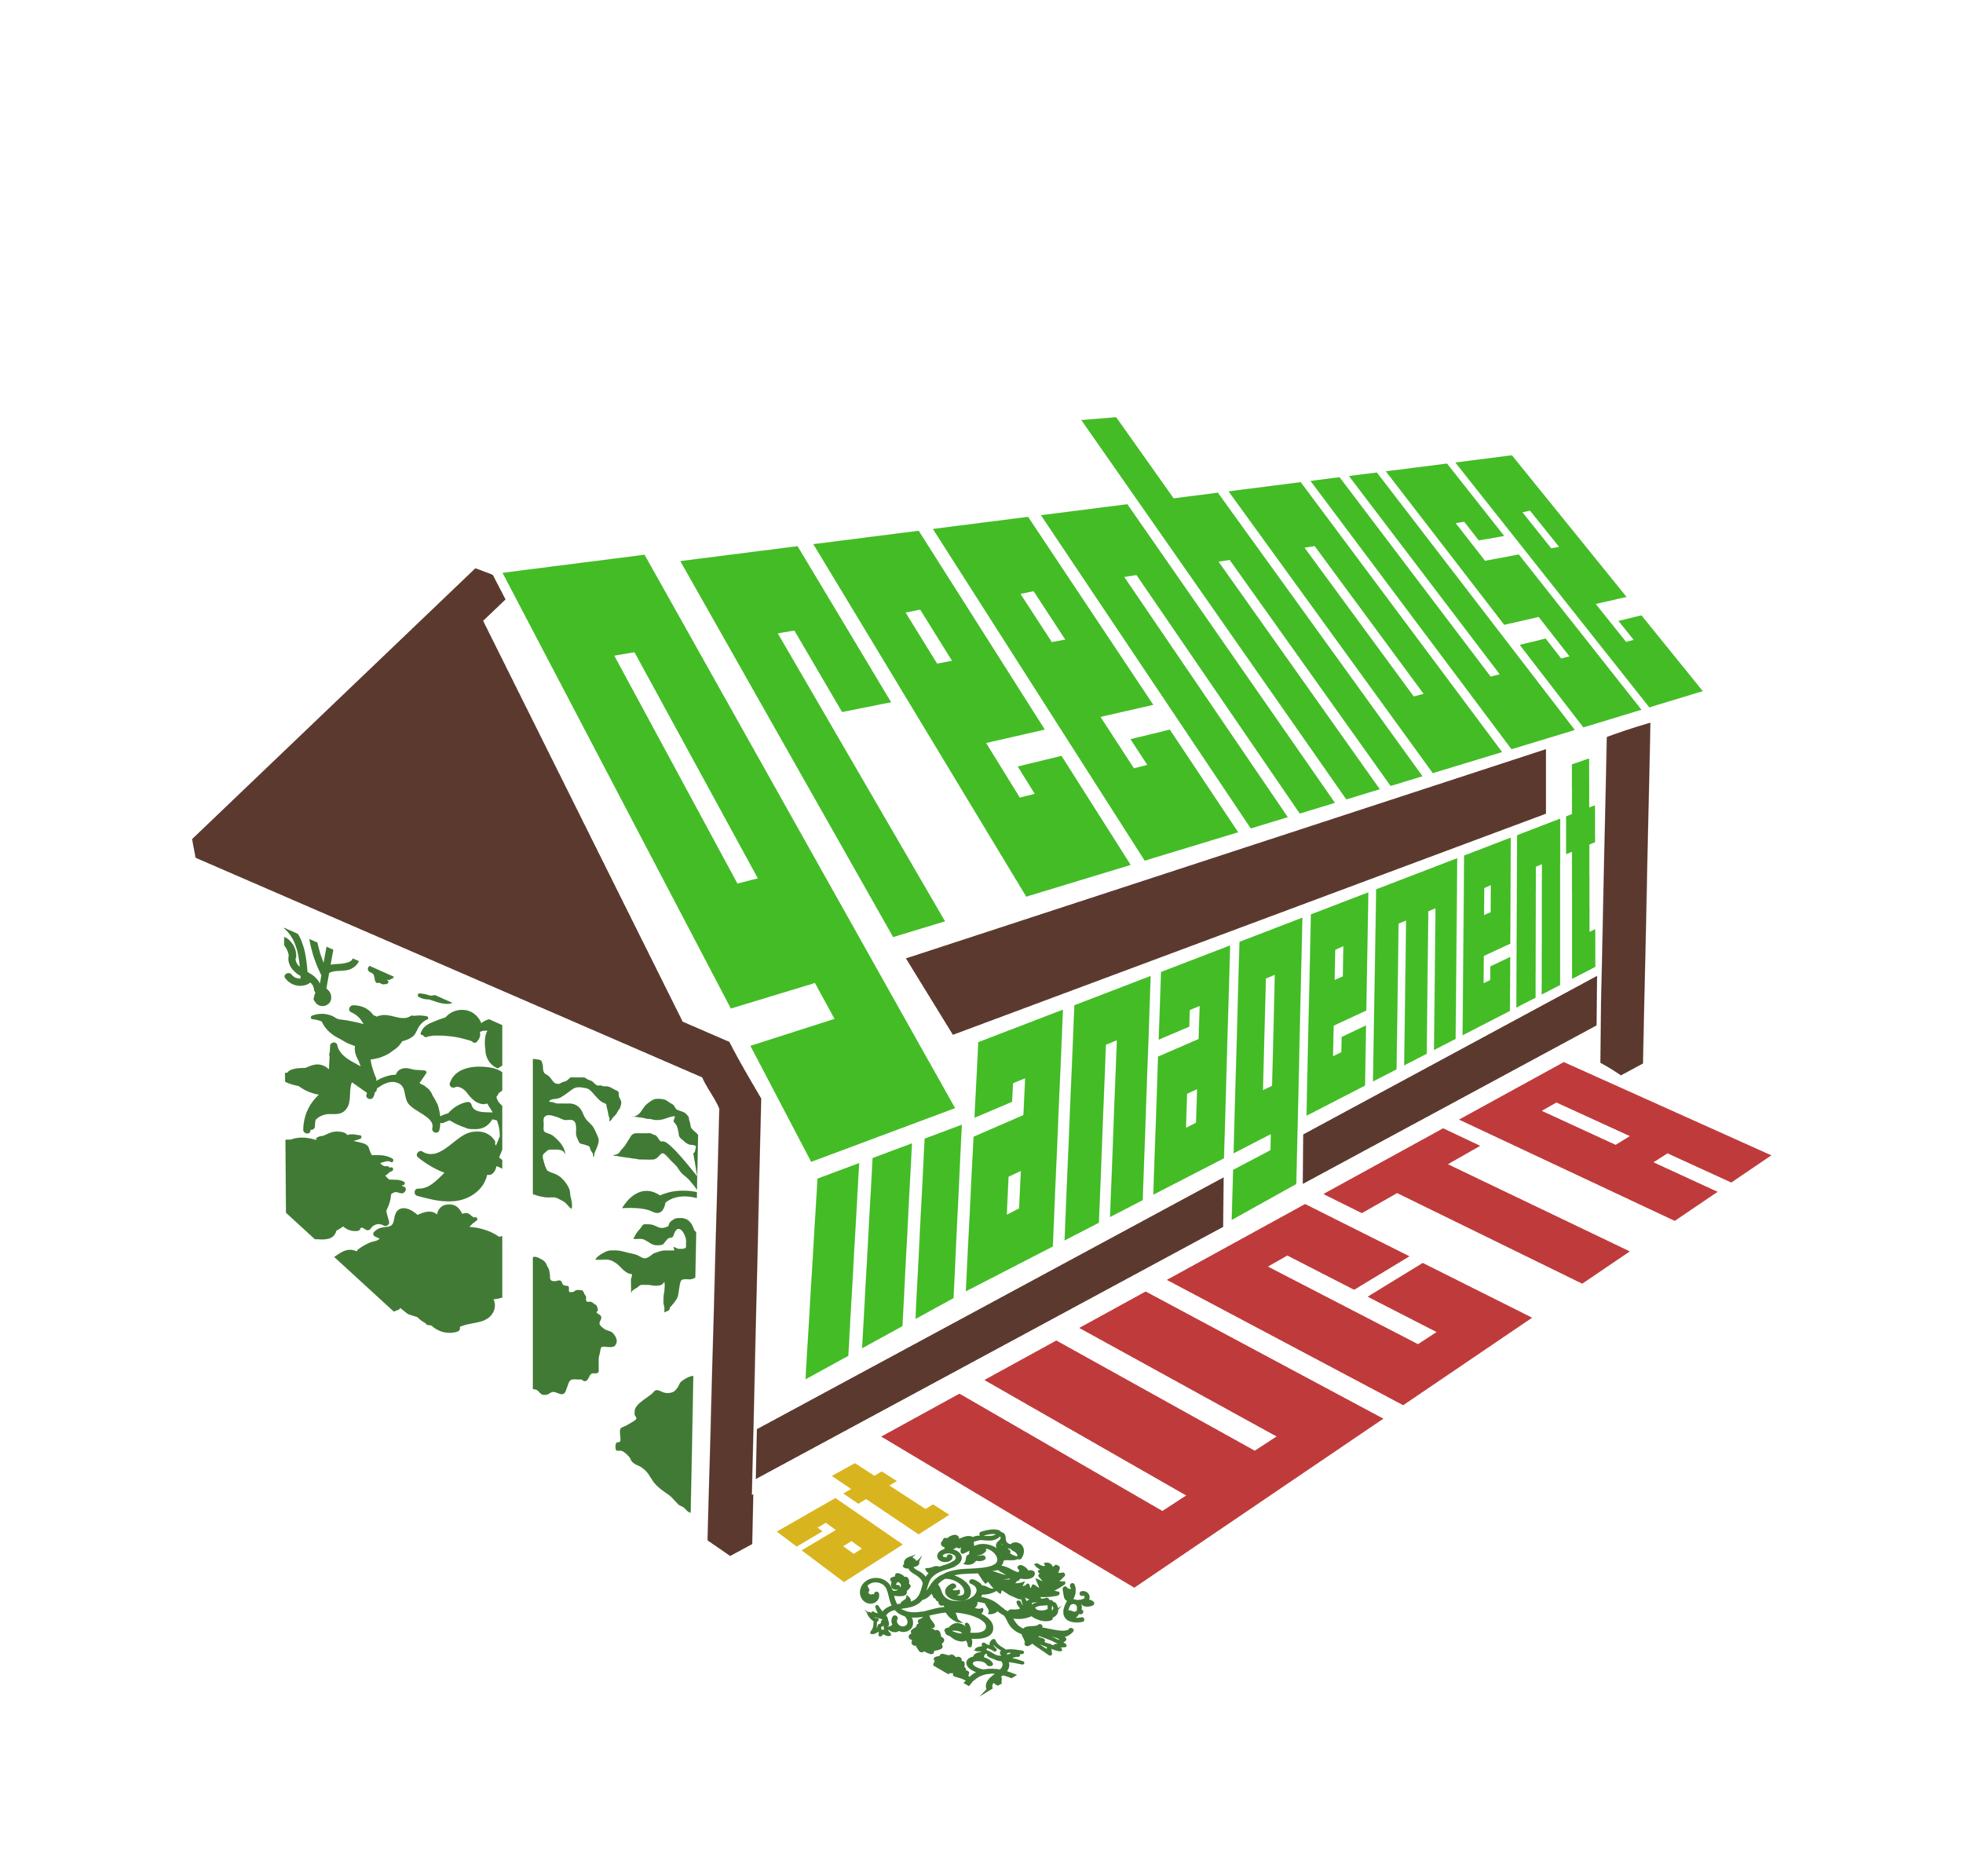 Greenhouse logo finals (2).png